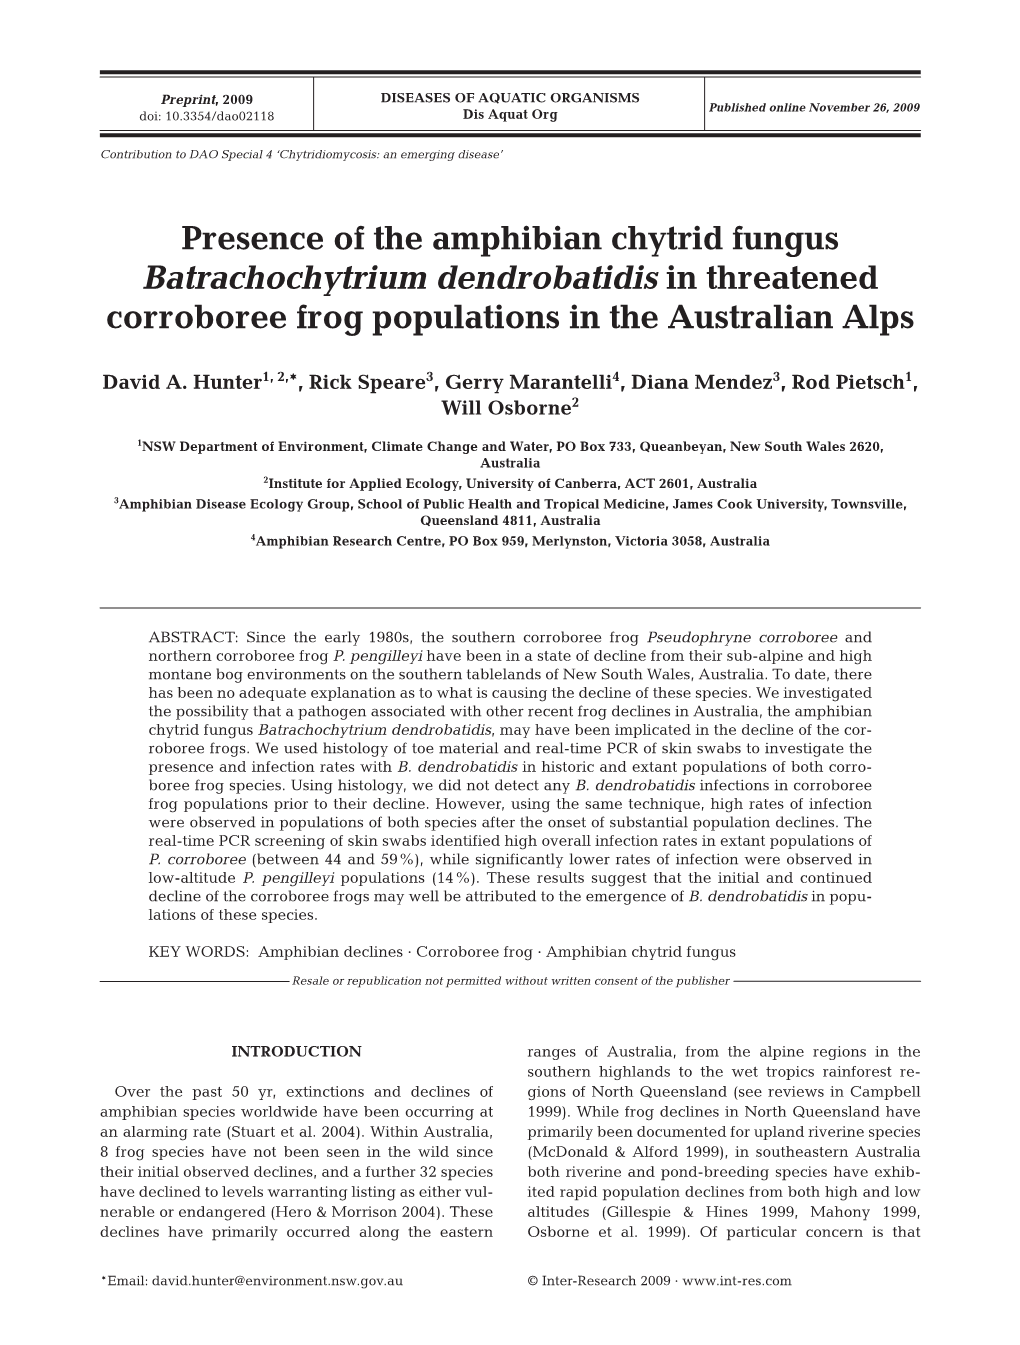 Presence of the Amphibian Chytrid Fungus Batrachochytrium Dendrobatidis in Threatened Corroboree Frog Populations in the Australian Alps